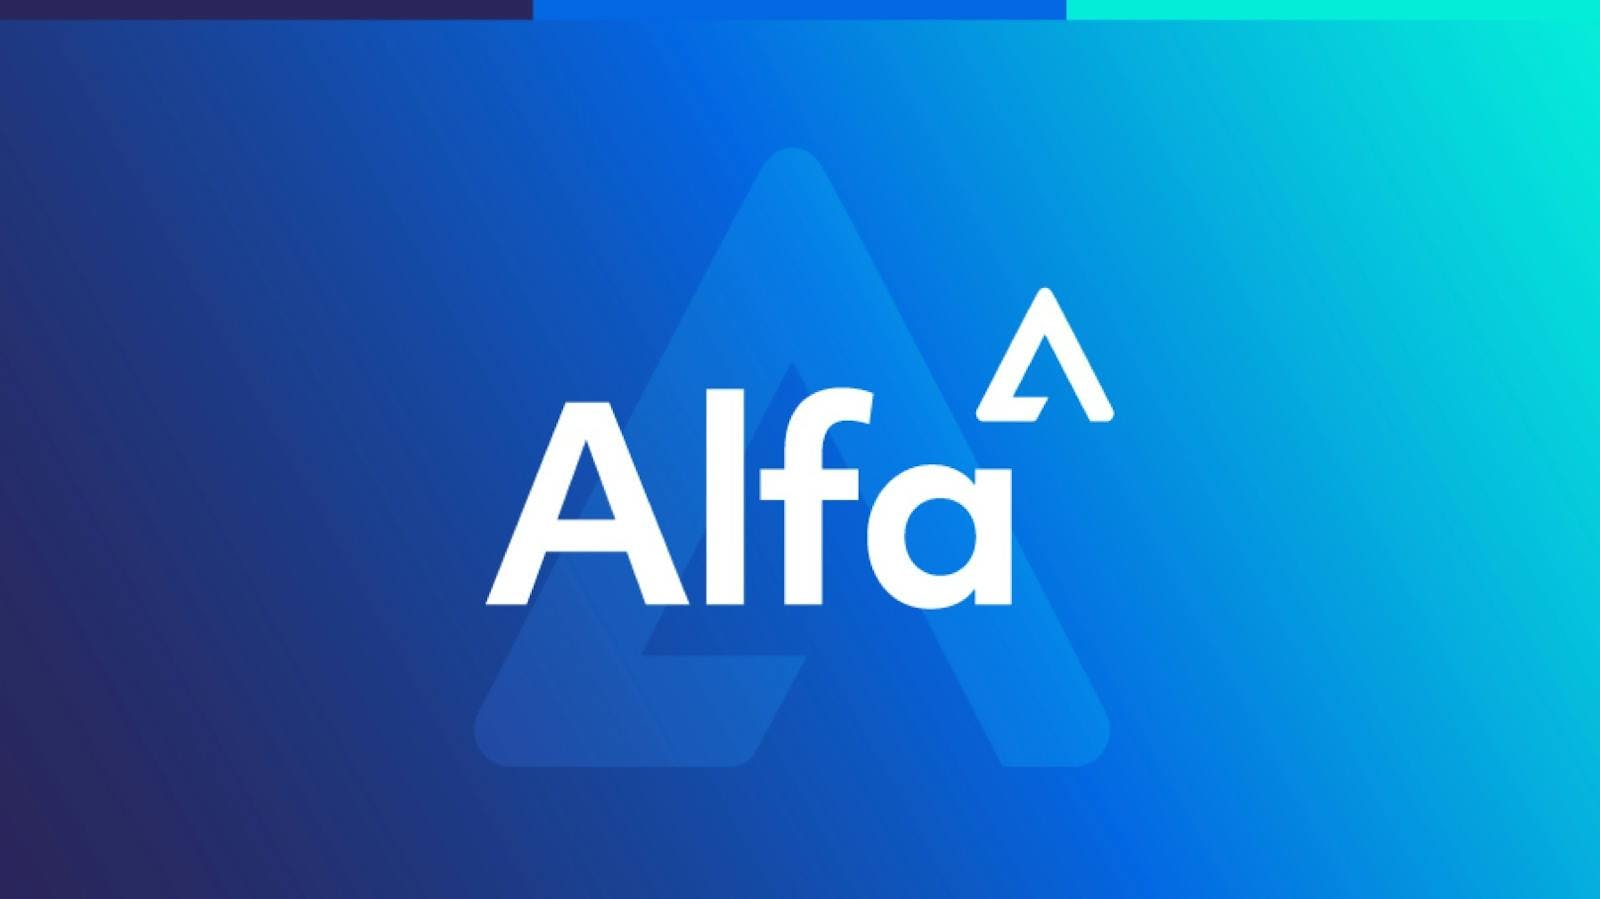 Alfa Logo on Blue Gradient